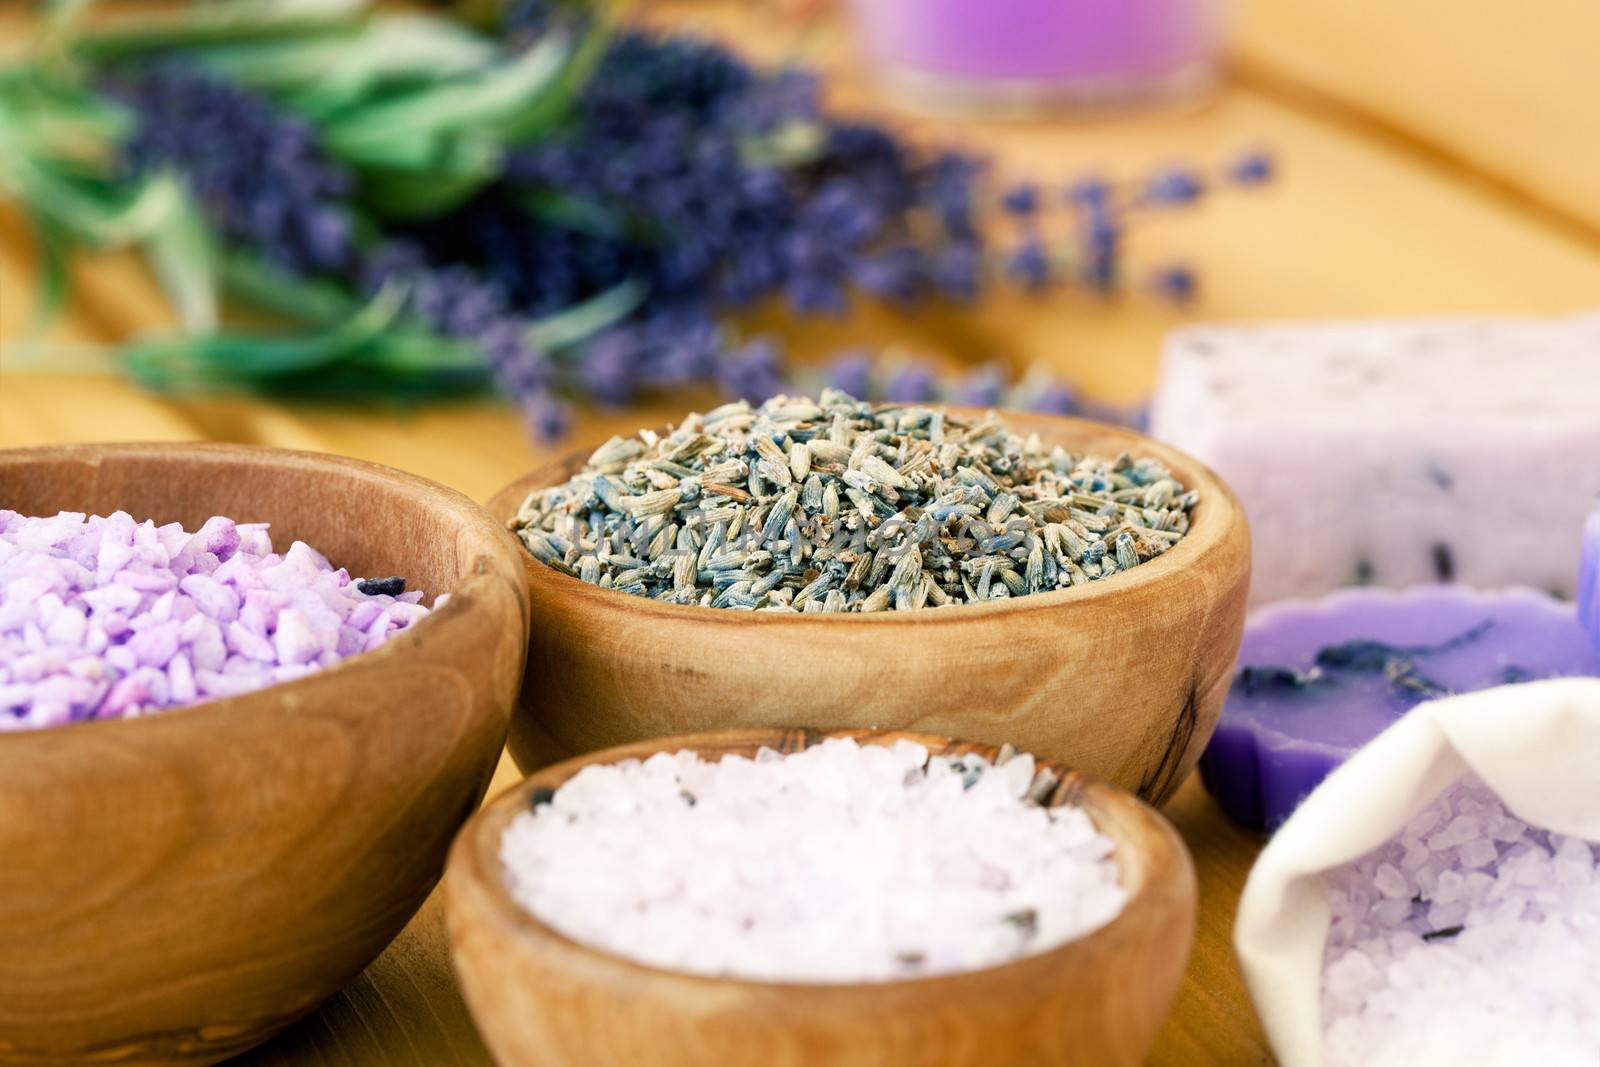 bowl of lavender bath salt - beauty treatment by motorolka